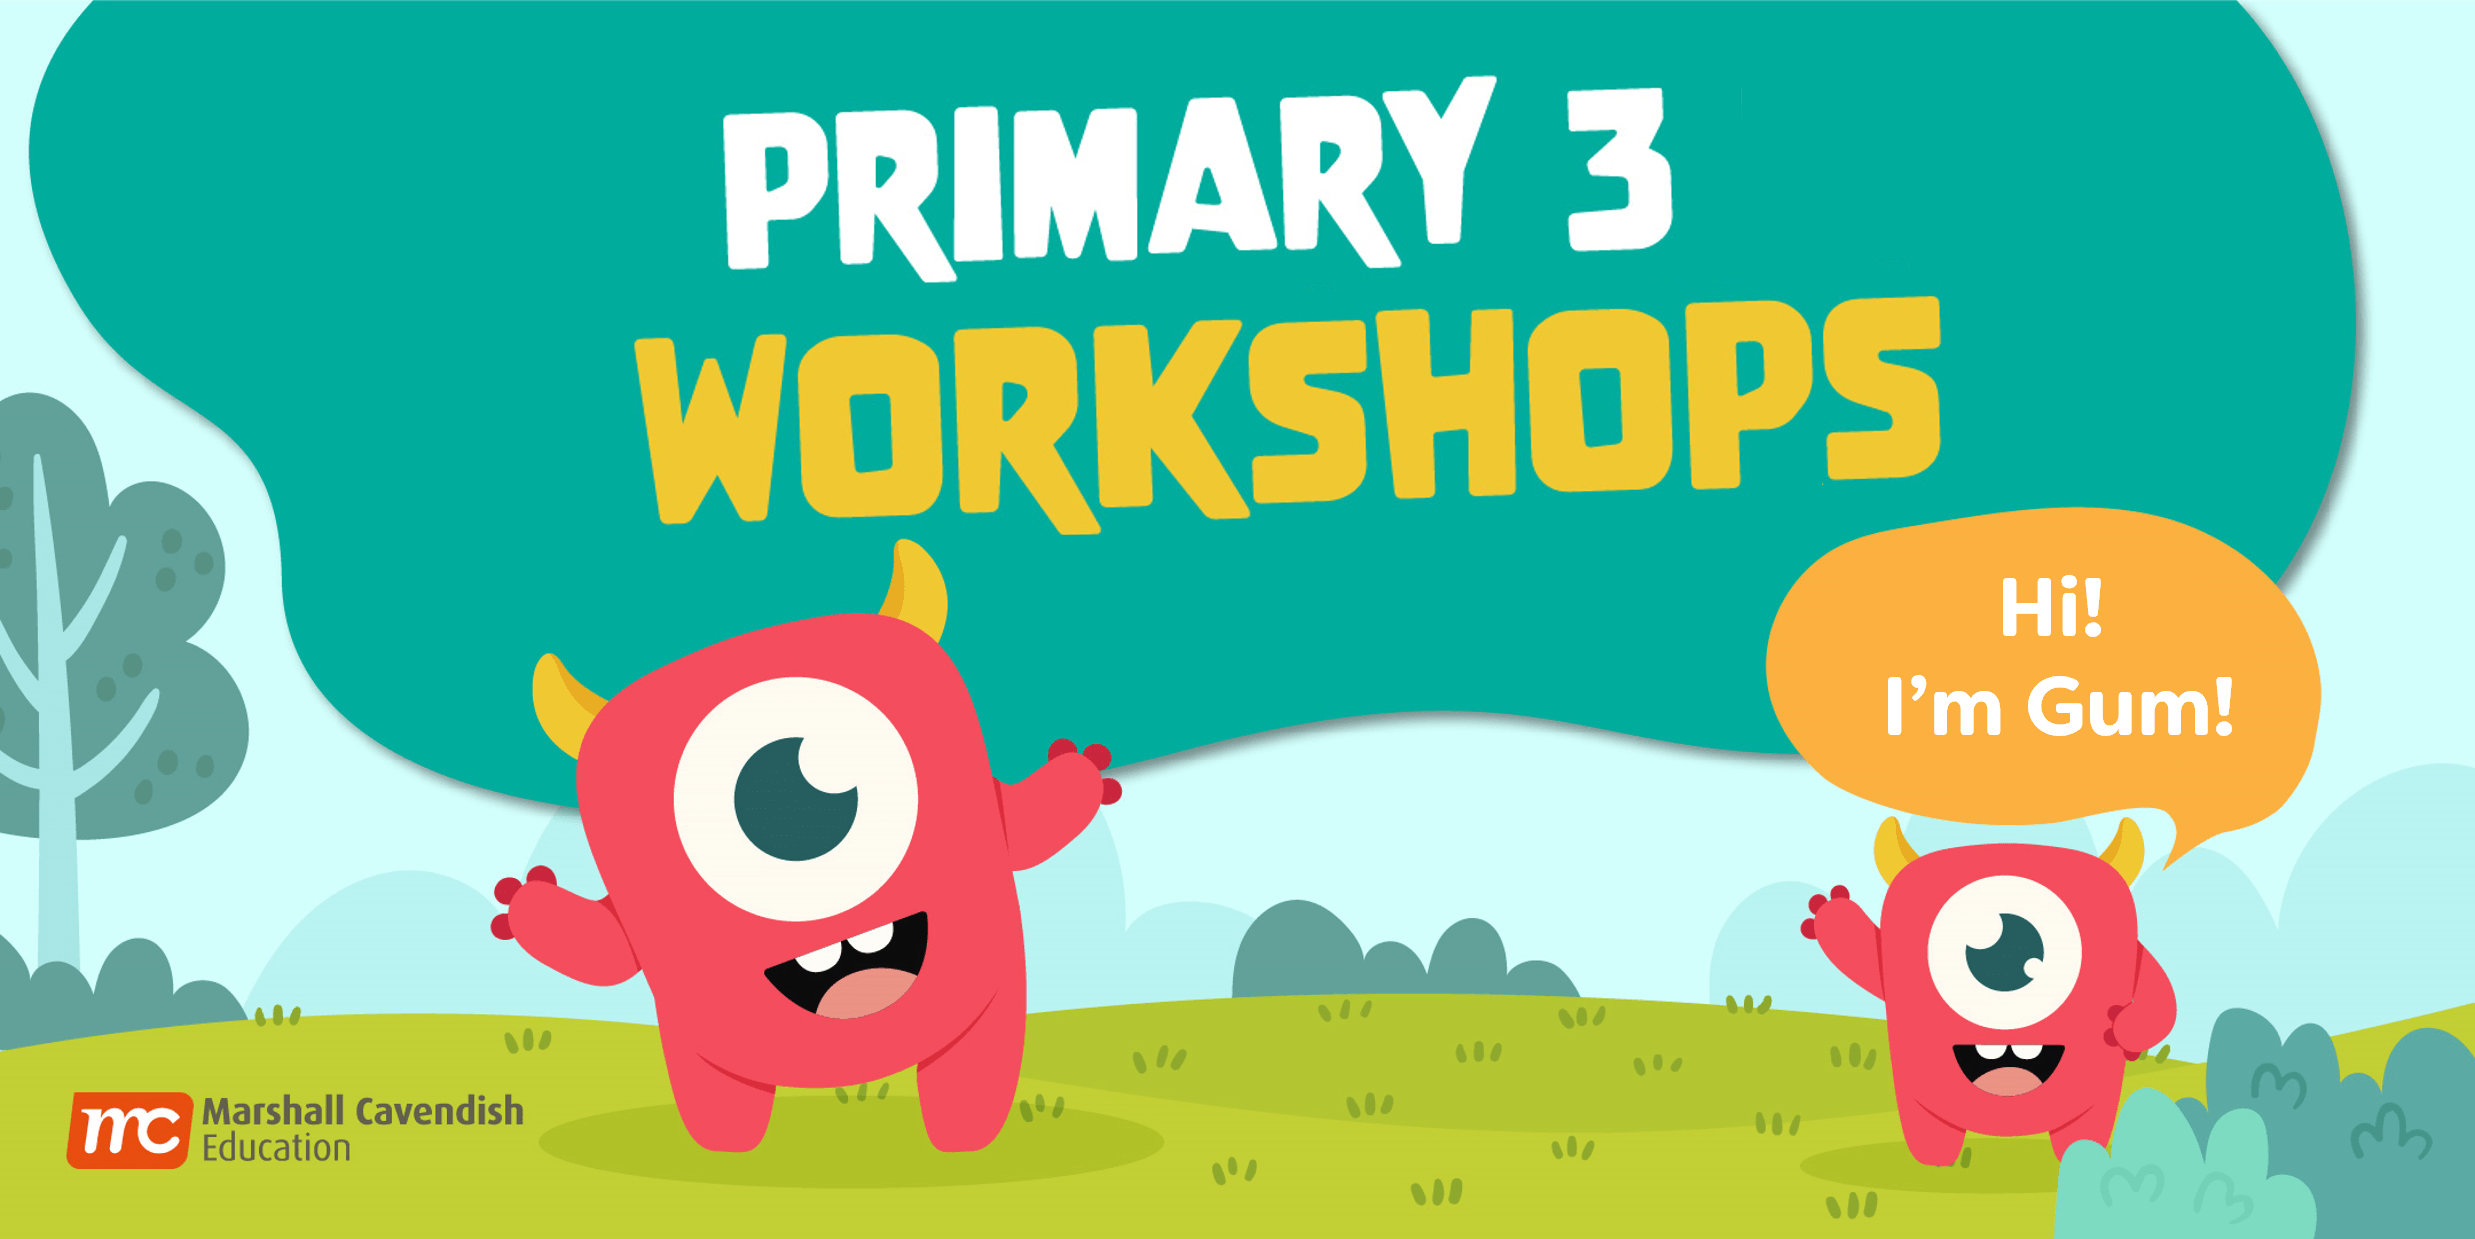 Primary 3 Workshops